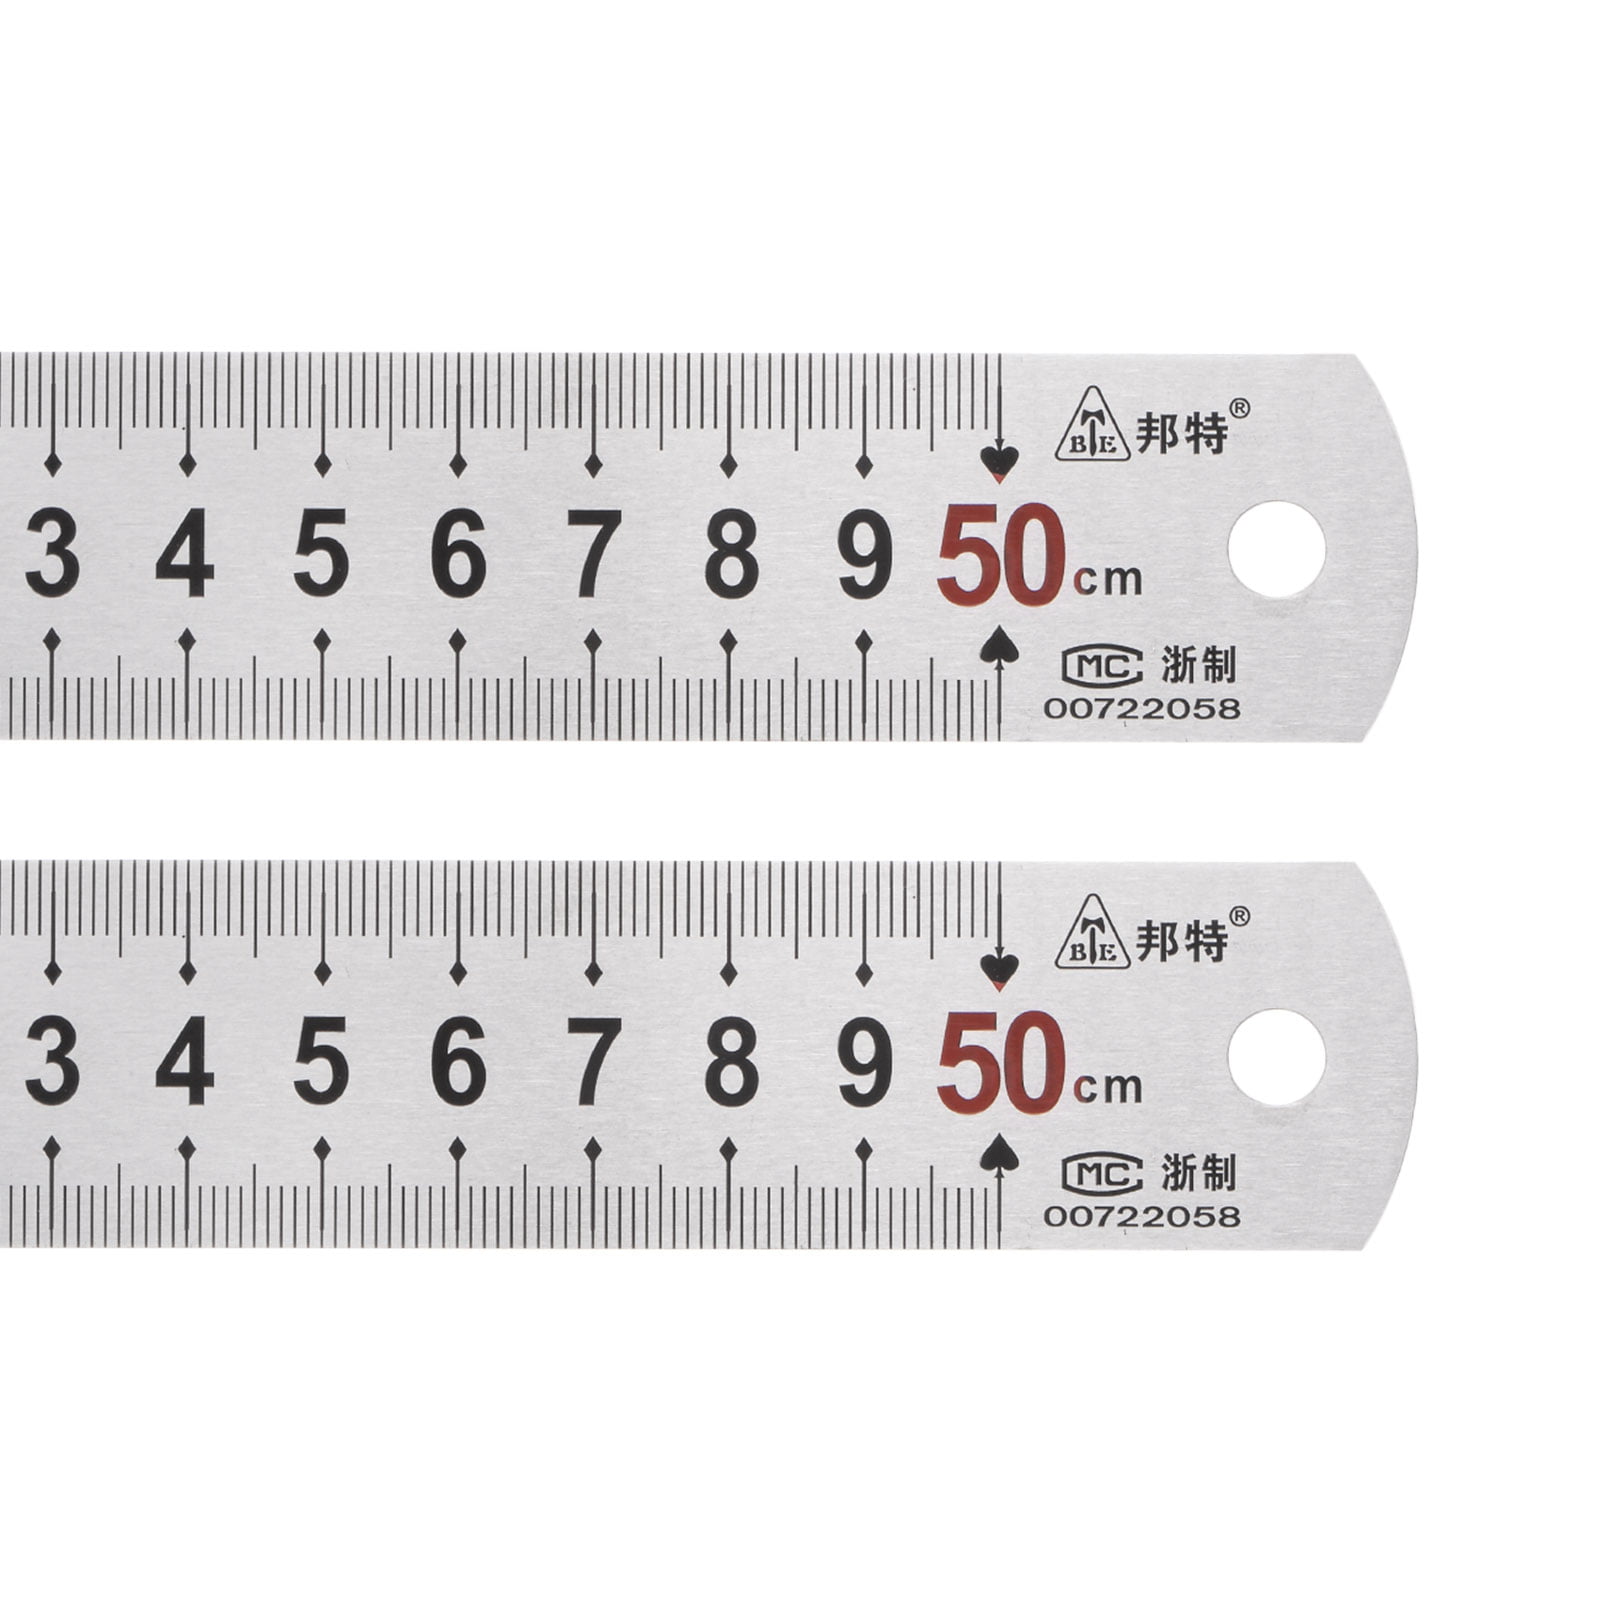 Uxcell 2 Packs Mini Tape Measure 2M Metric Ruler Stainless Steel